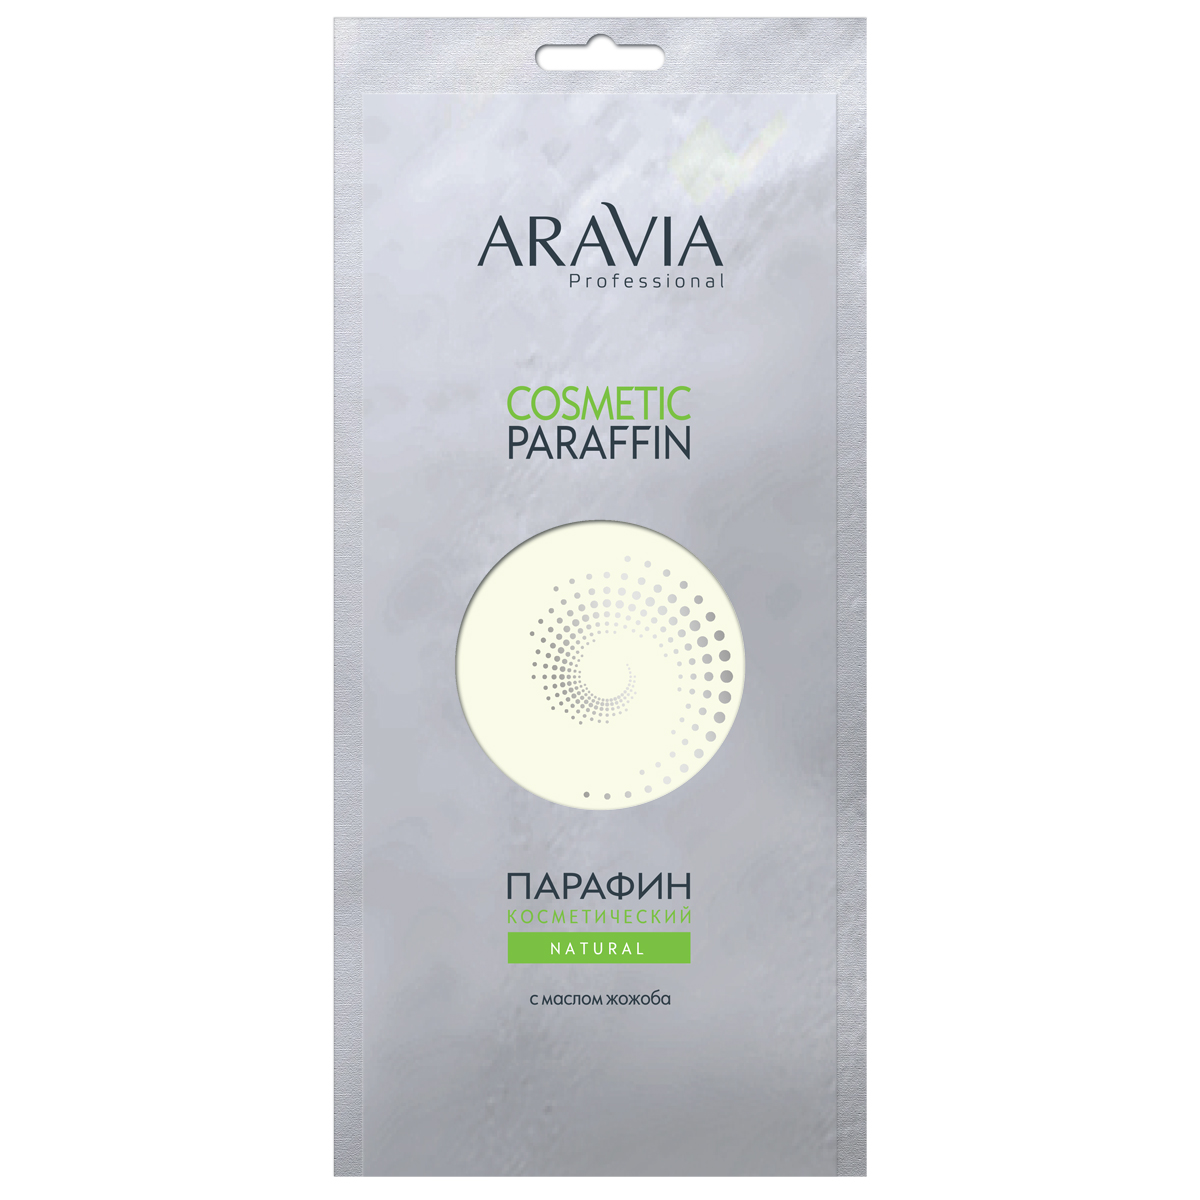 Aravia парафин натуральный с маслом жожоба 500гр (р)